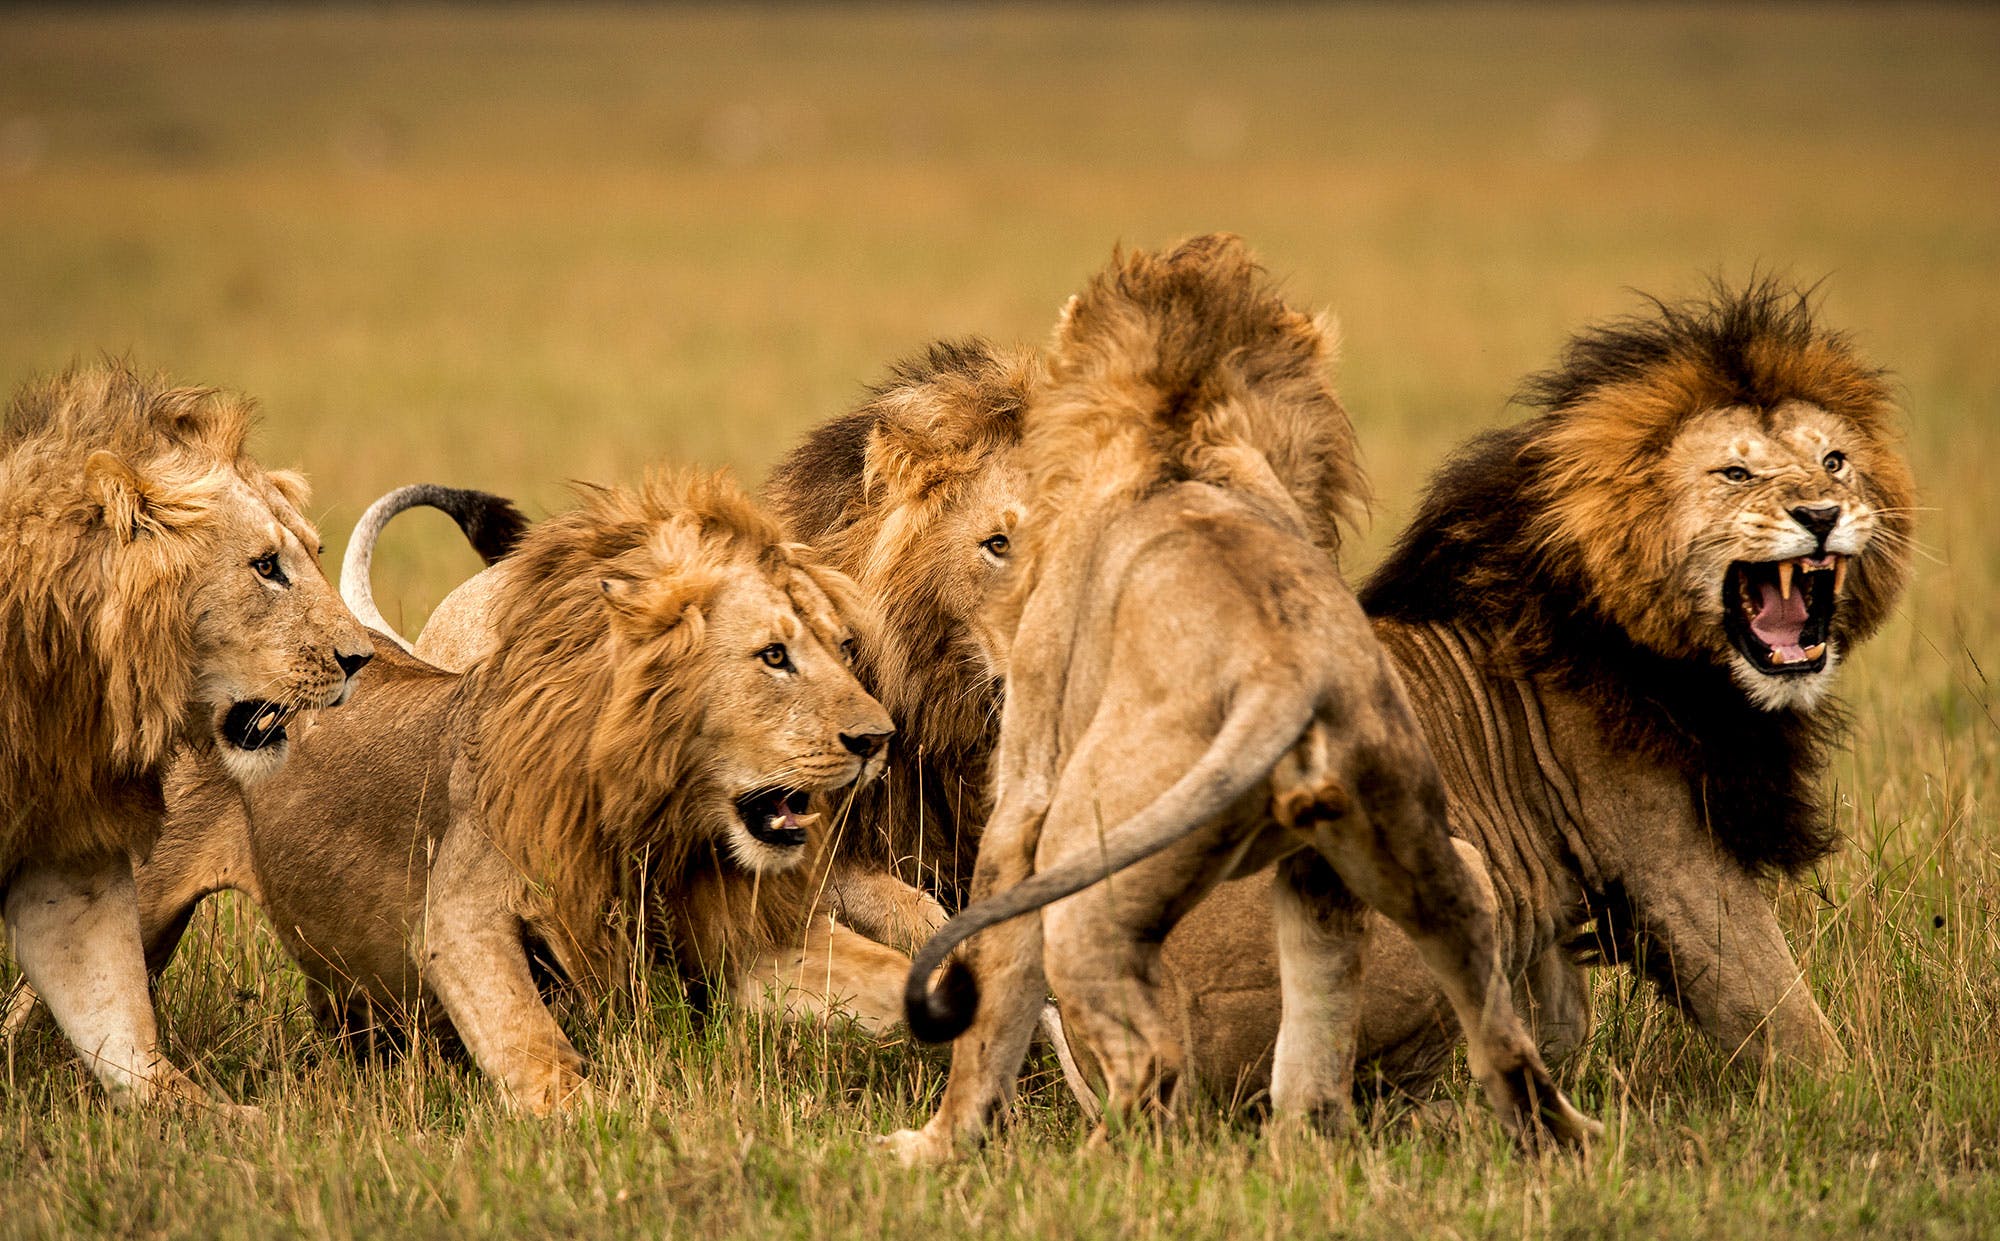 South Africa to ban private lion breeding | Premium Times Nigeria